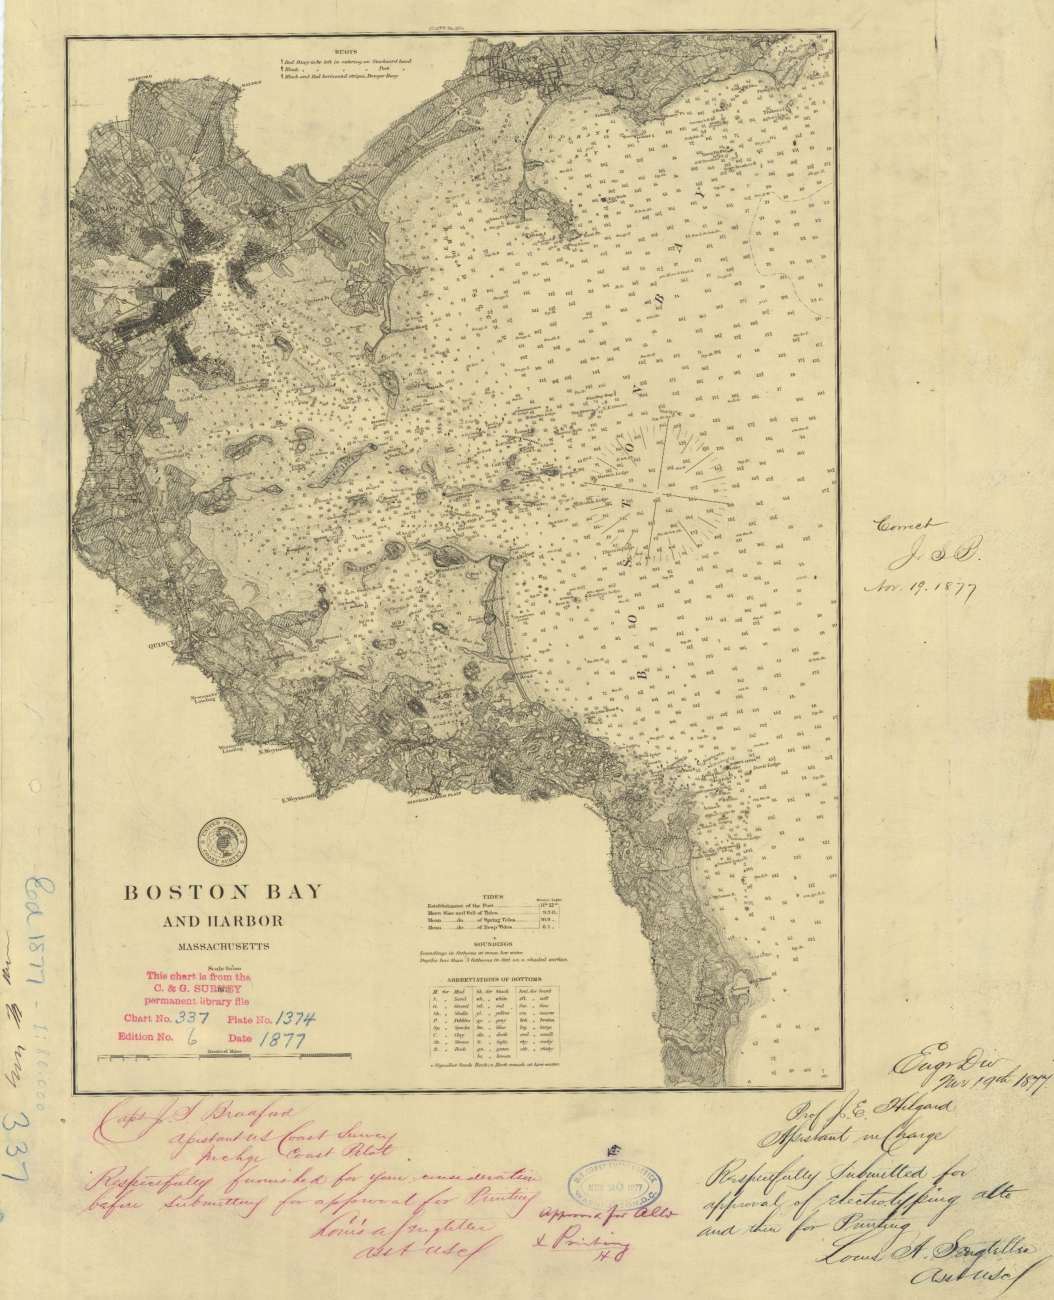 A chart of Boston Bay and Harbor, Massachussetts